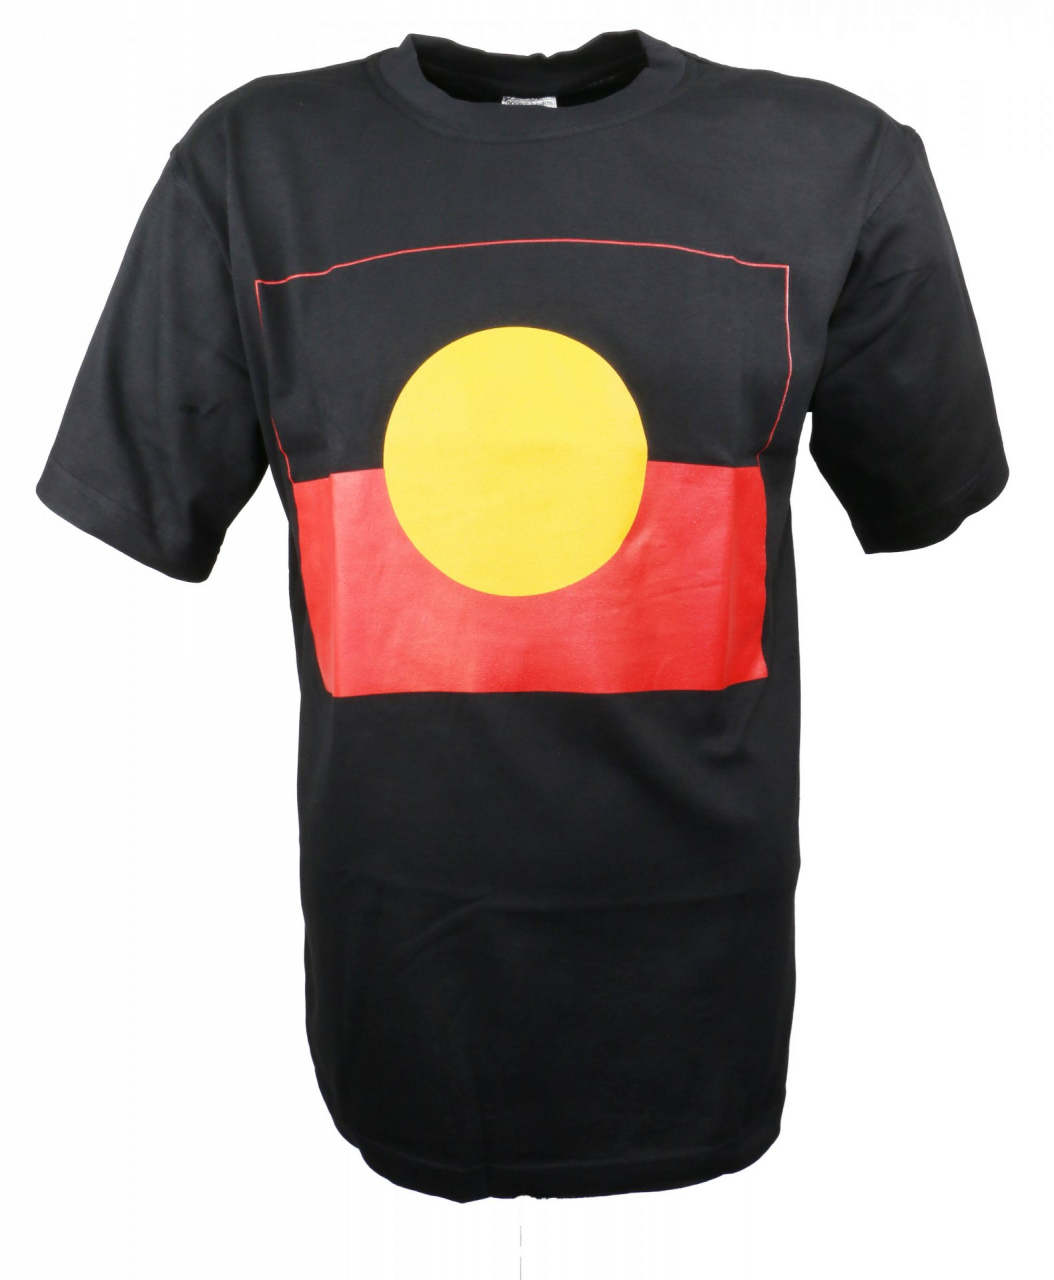 Tričko Gooses Aboriginal Flag - černé, XL